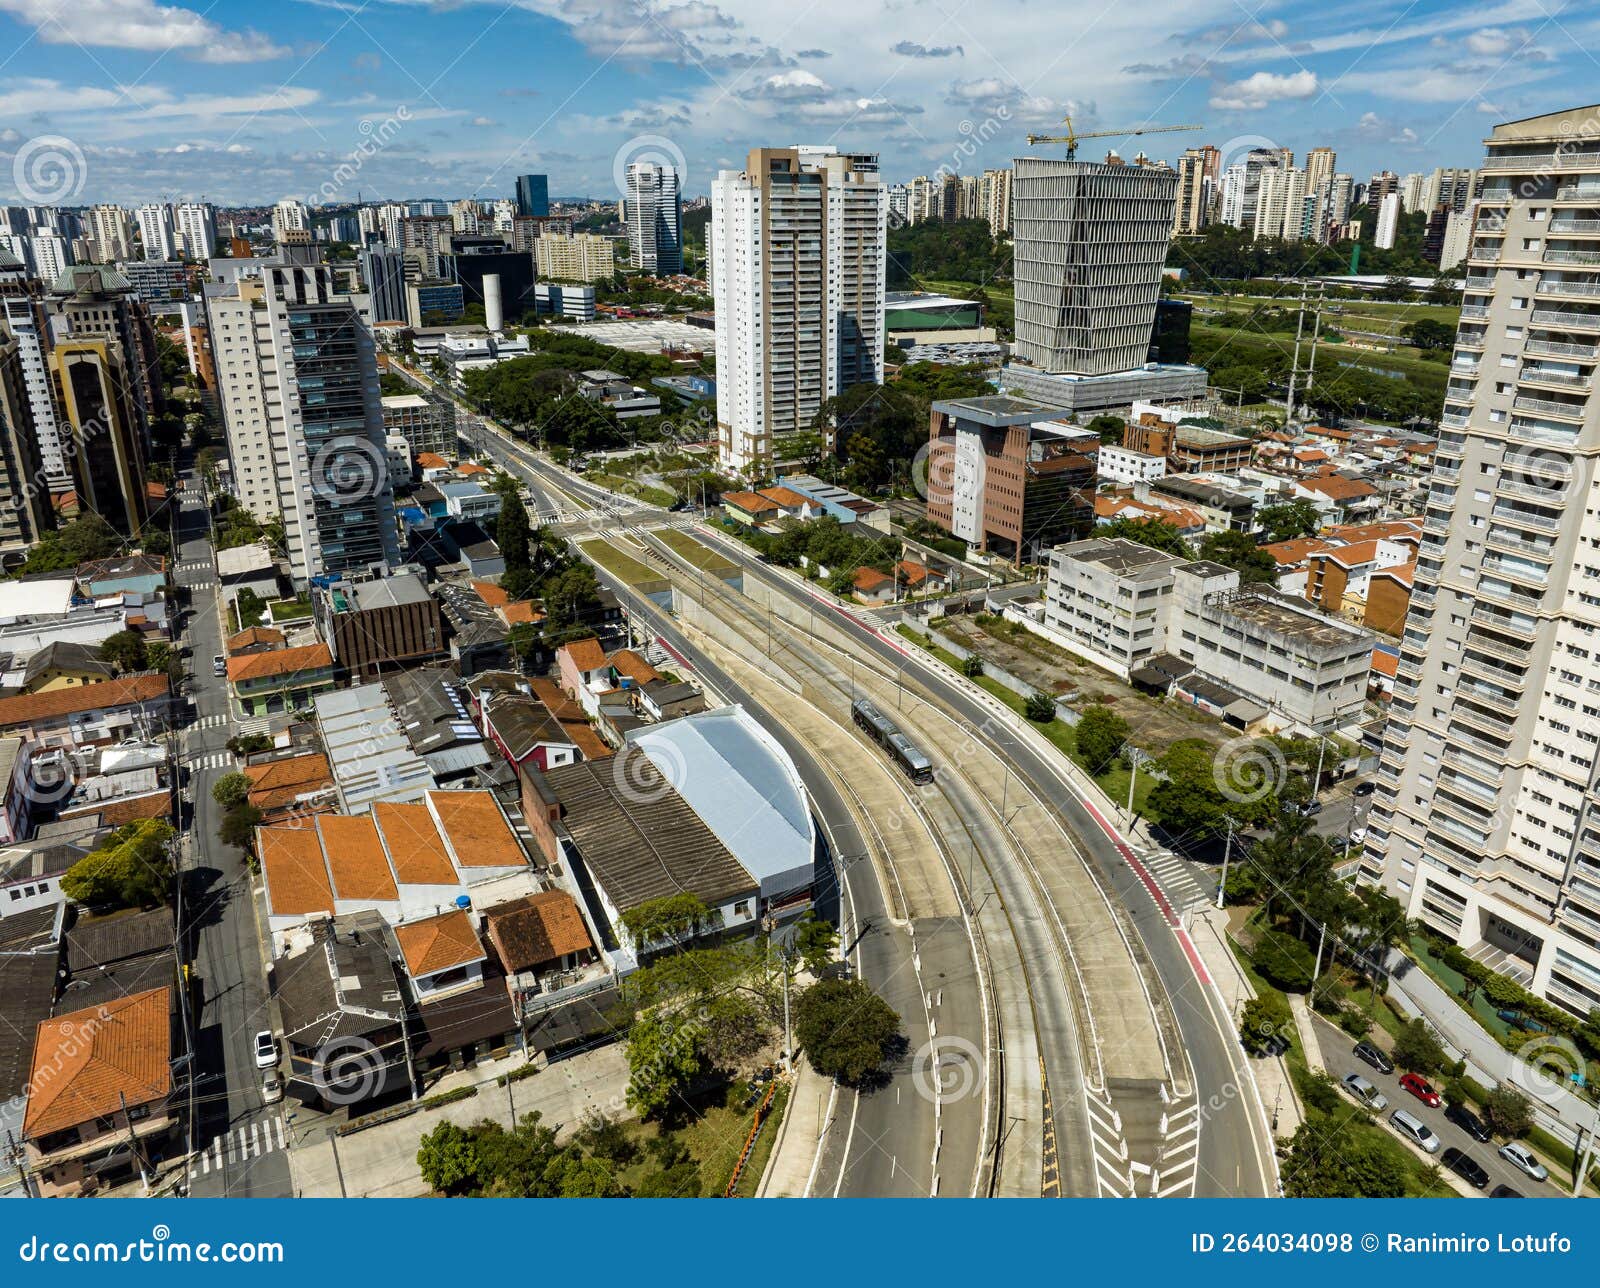 street aerial view. sao paulo, brazil.